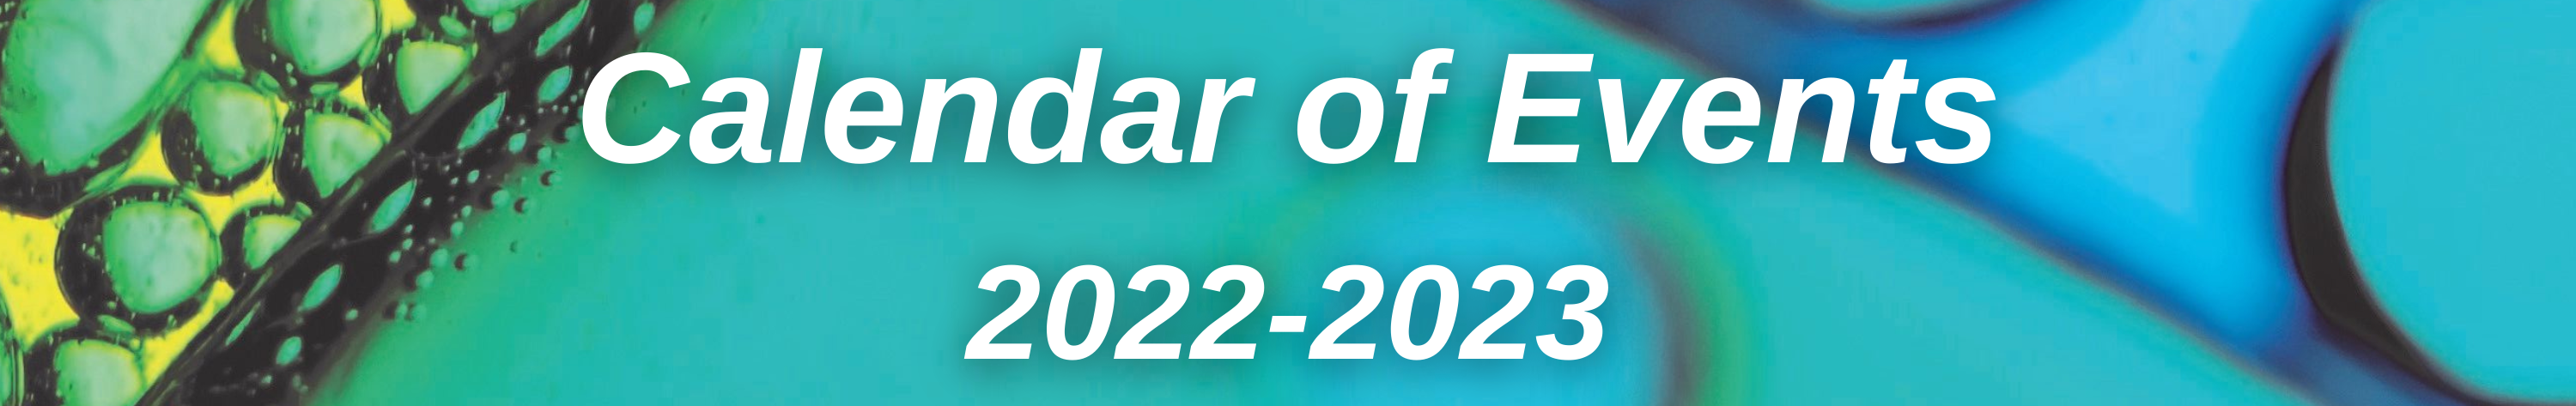 Calendar of Events 2022-2023